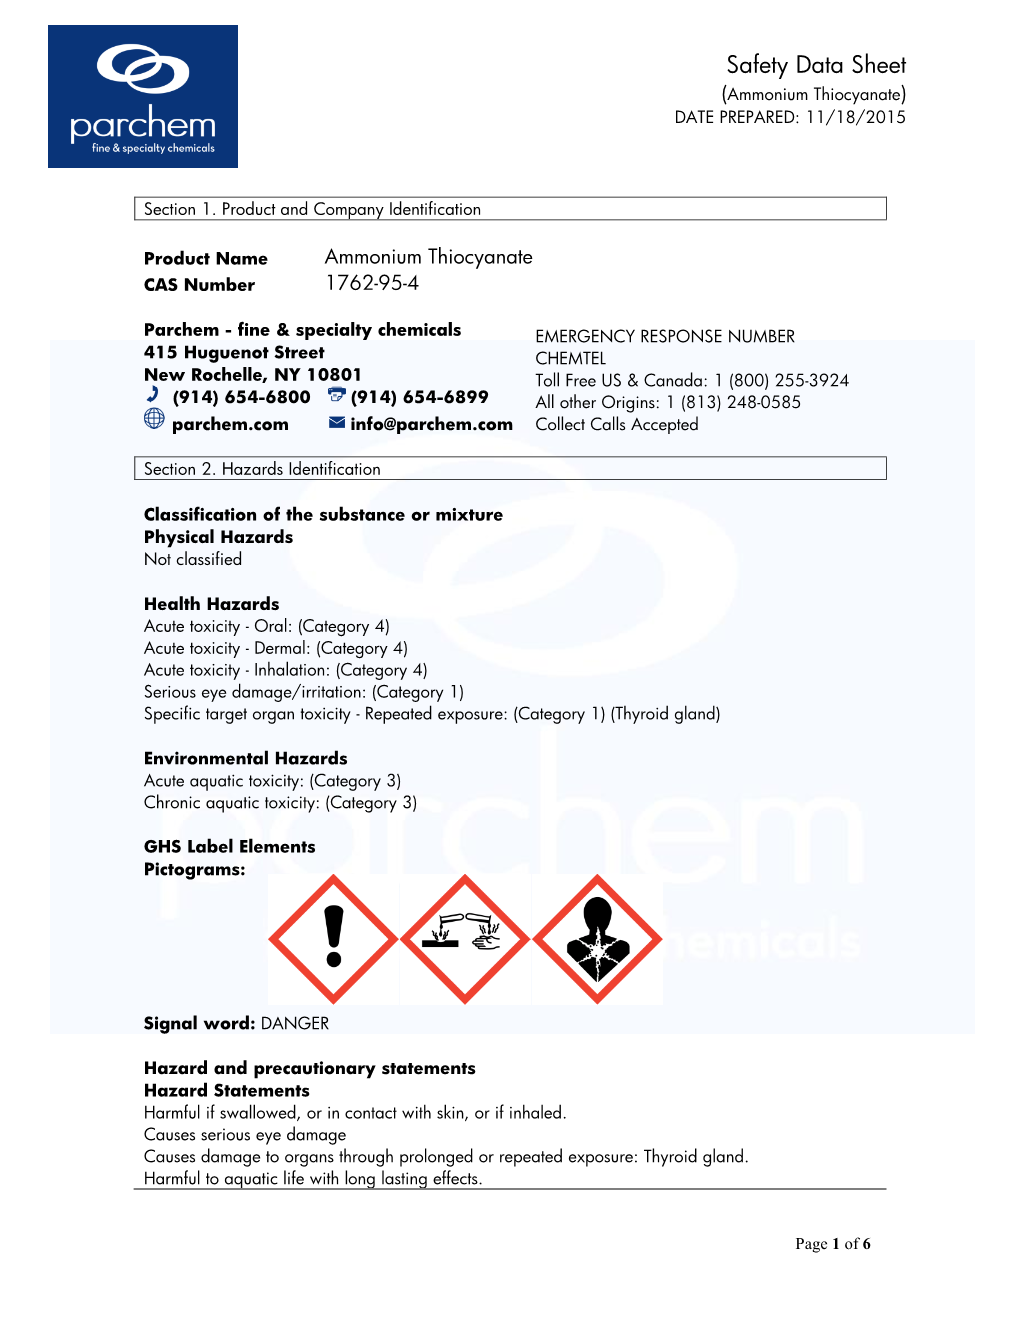 Safety Data Sheet (Ammonium Thiocyanate) DATE PREPARED: 11/18/2015